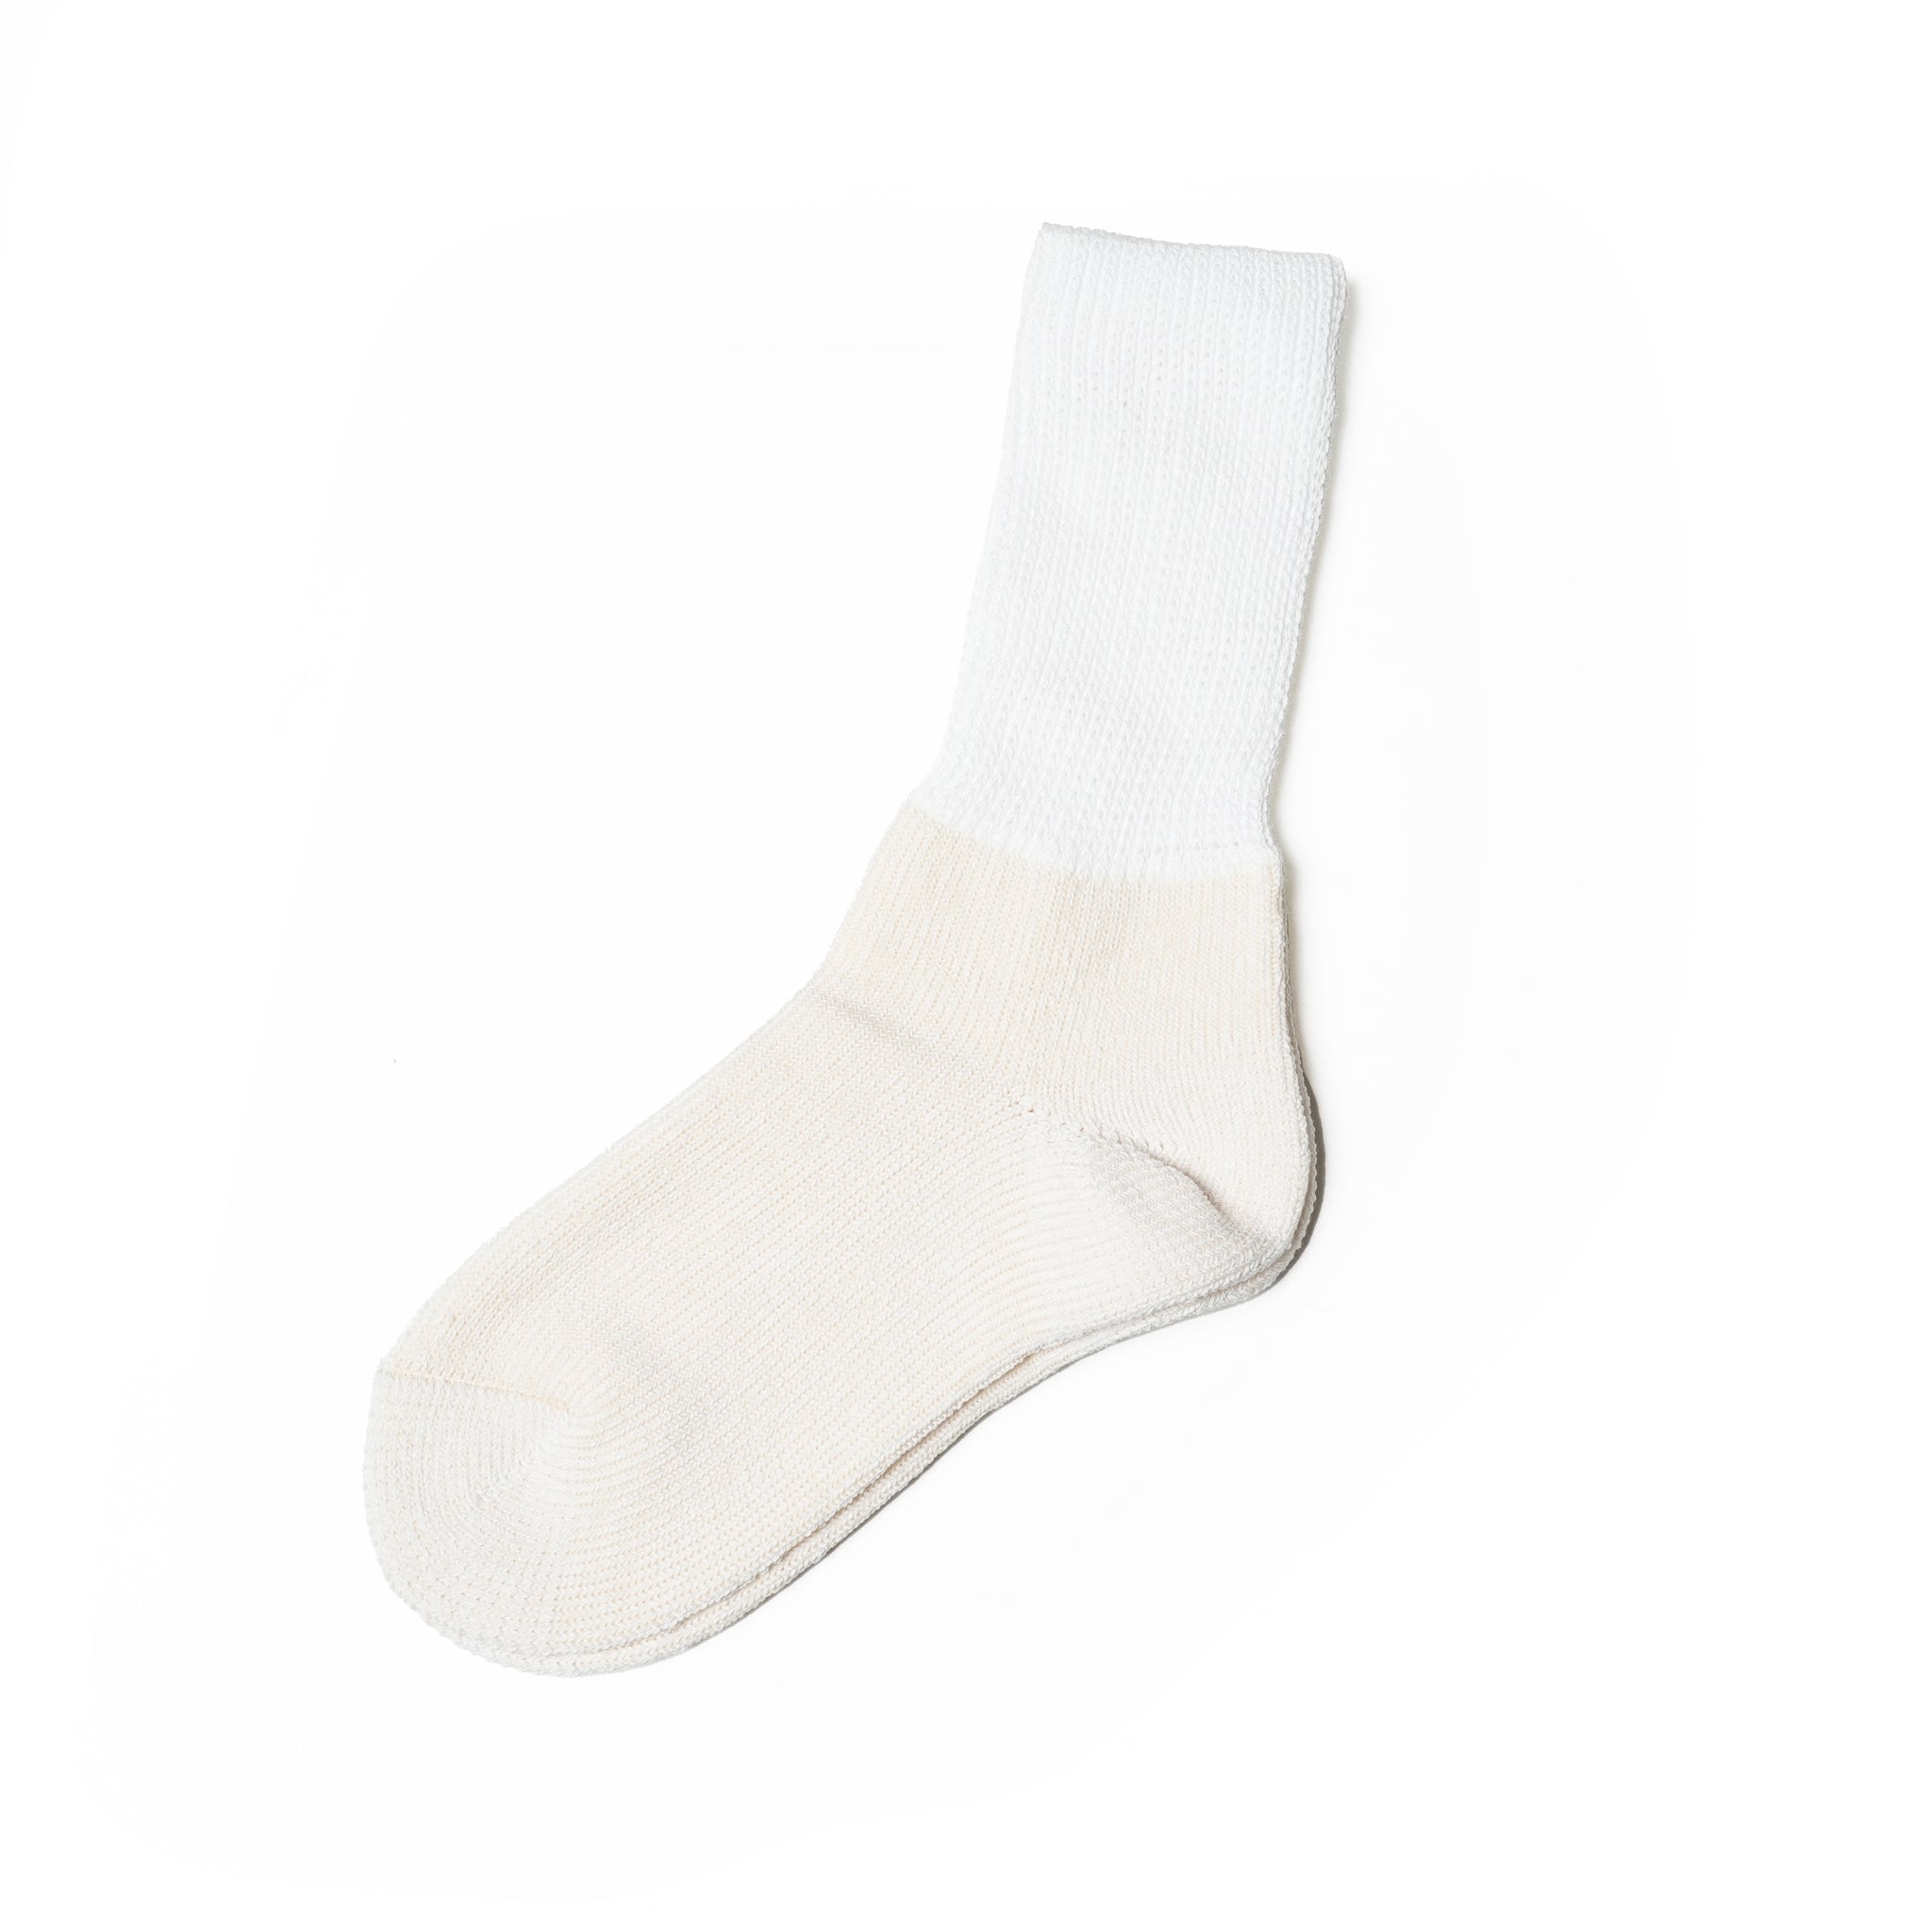 Name:CHUCK Socks| Color:Ecru/Gray/Red| Size:Free 【CATTA_カッタ】